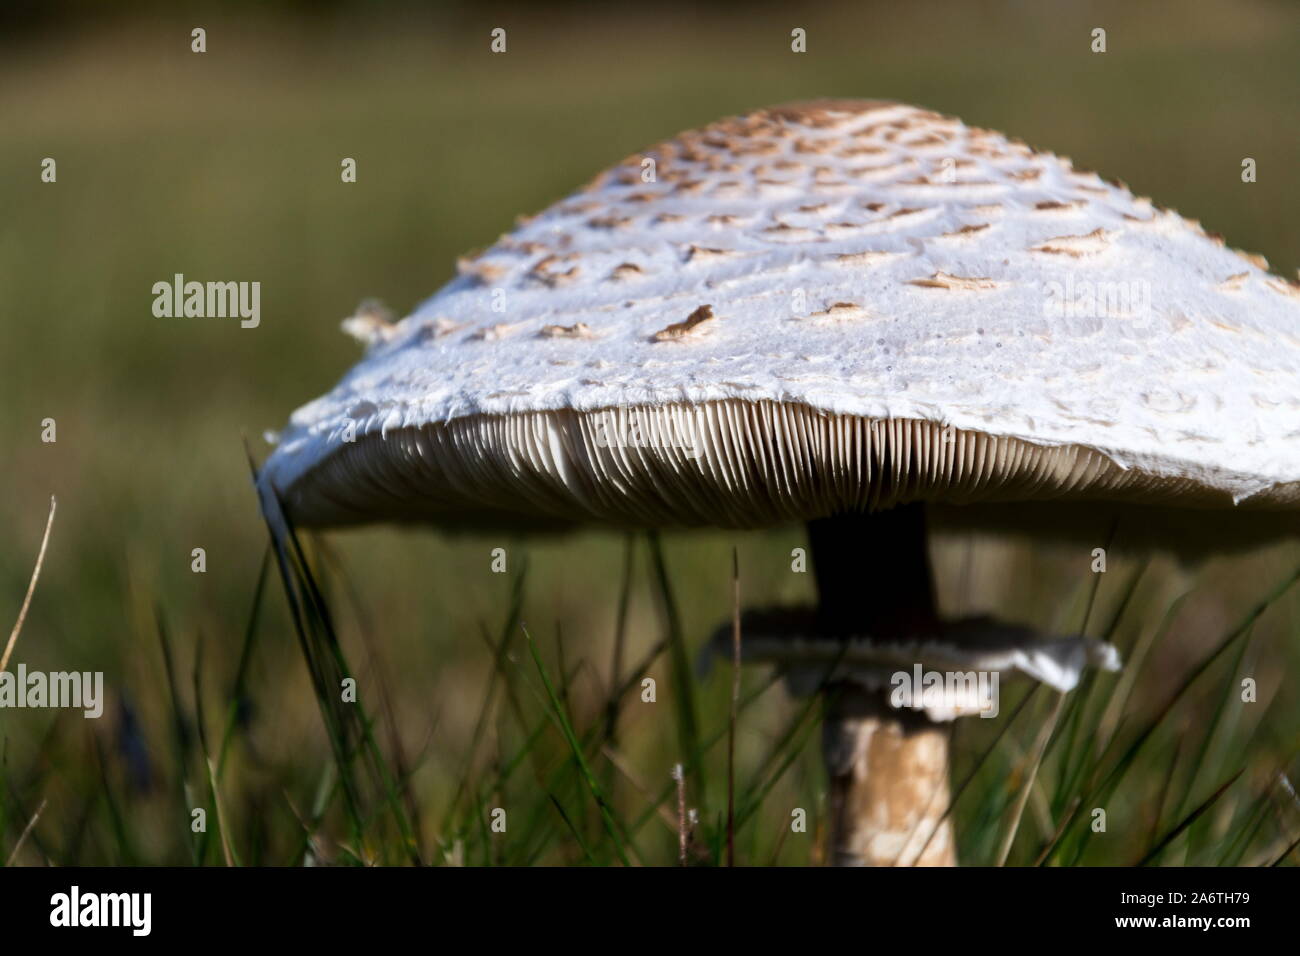 Parasol mushroom, macrolepiota procera fungus in green grass on sunny autumn day, copy space Stock Photo